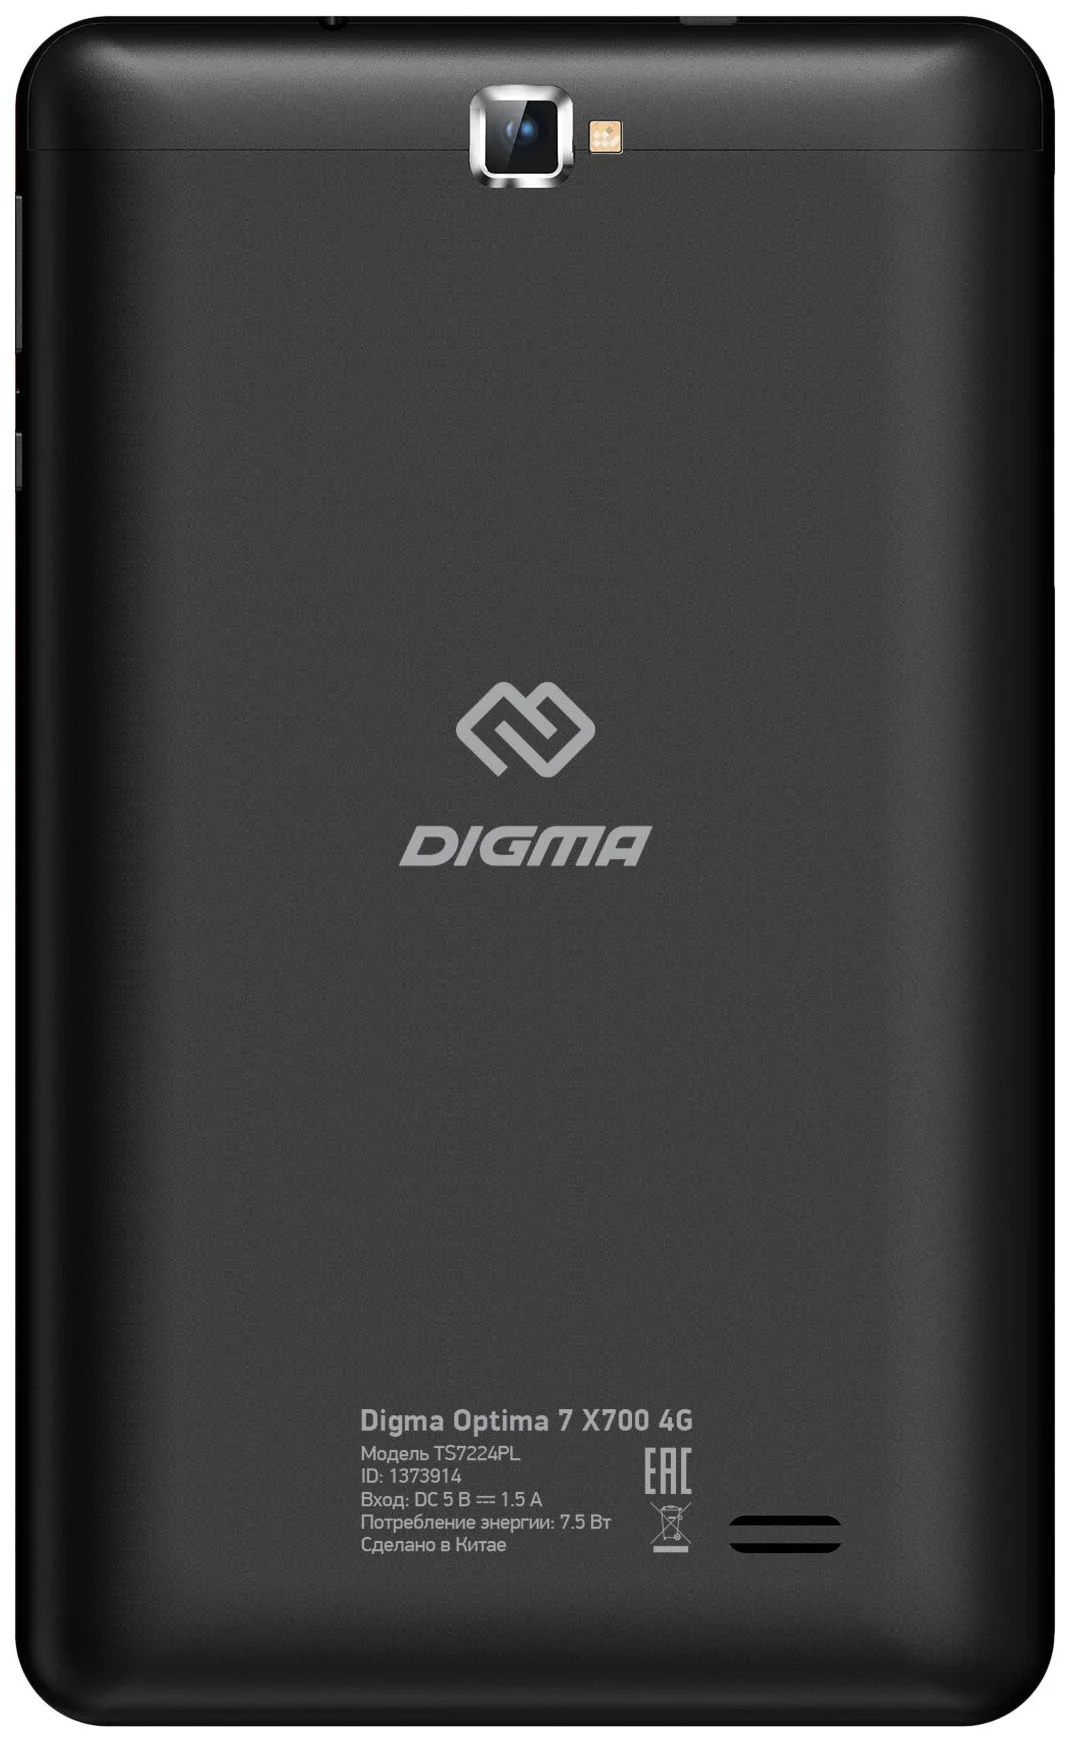 DIGMA Optima 7 X700 4G - камеры: основная 2 МП, фронтальная 2 МП